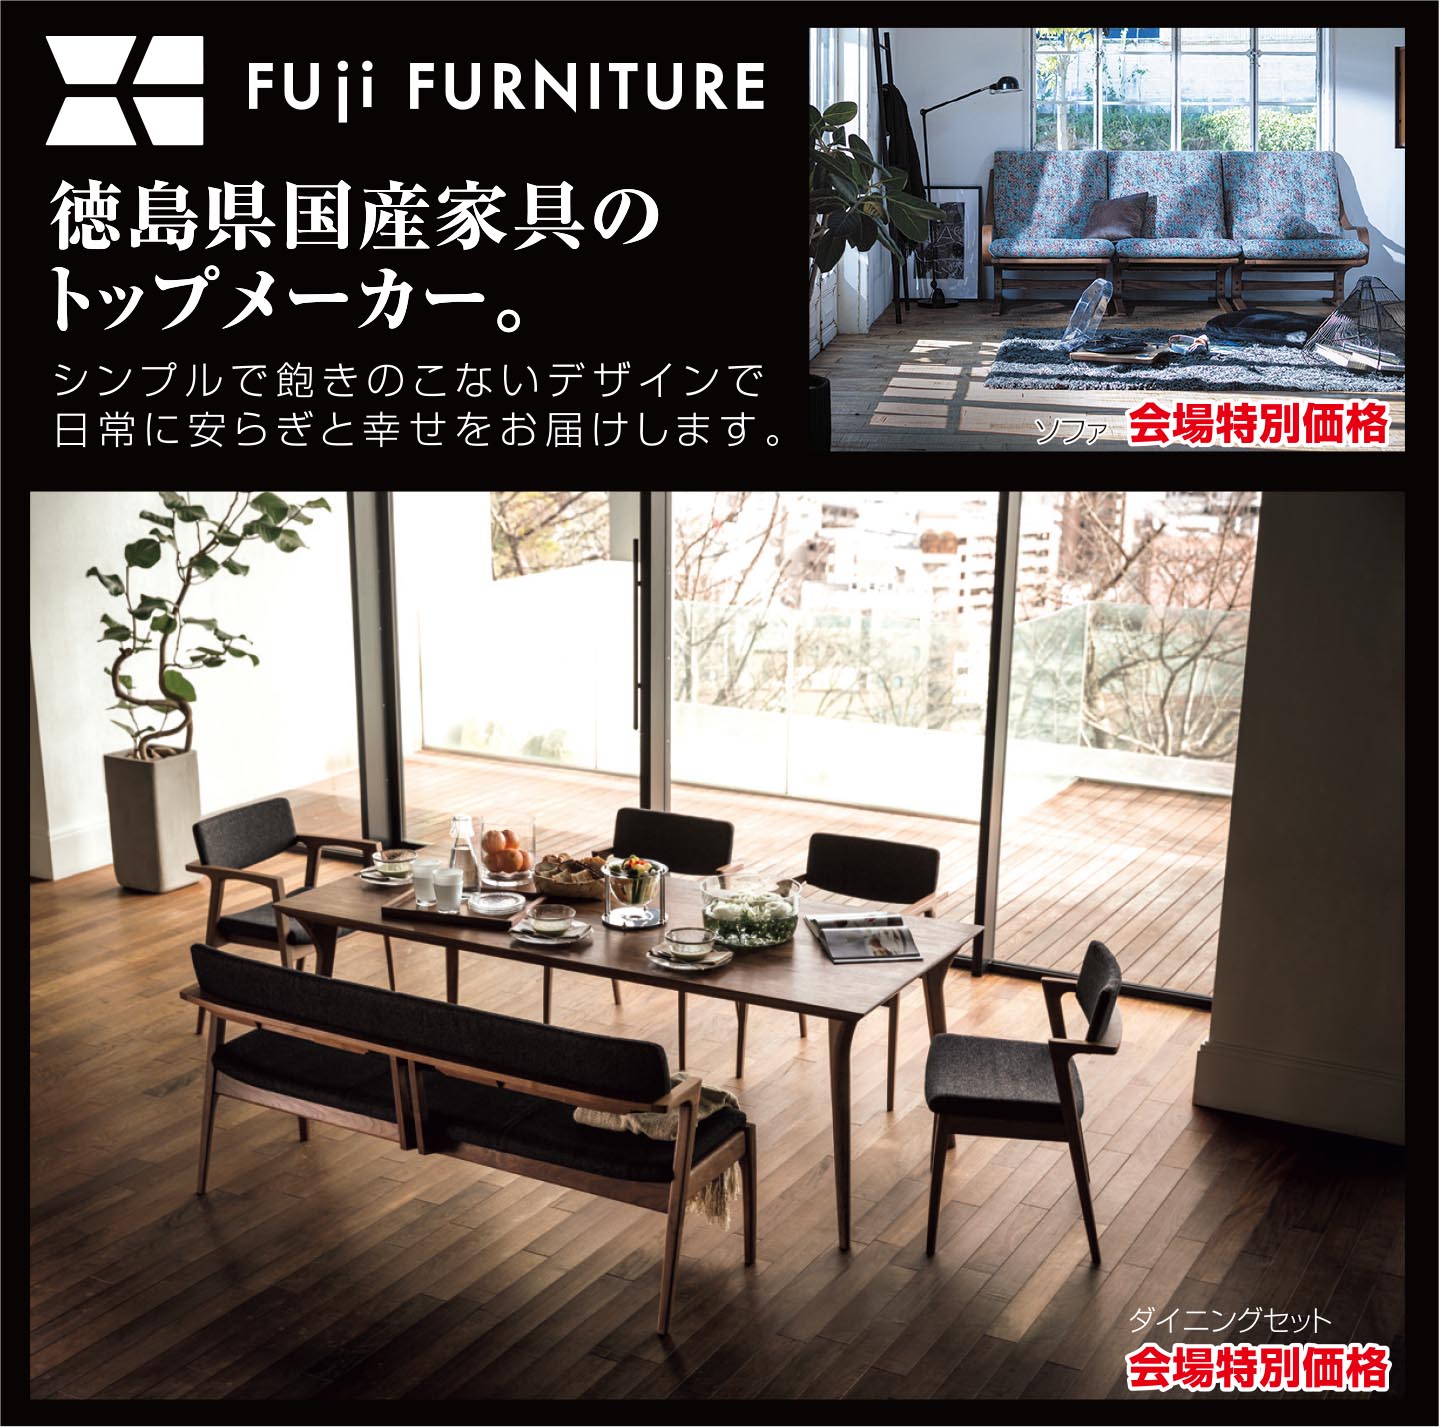 Fuji FURNITURE 徳島県国産家具のトップメーカー